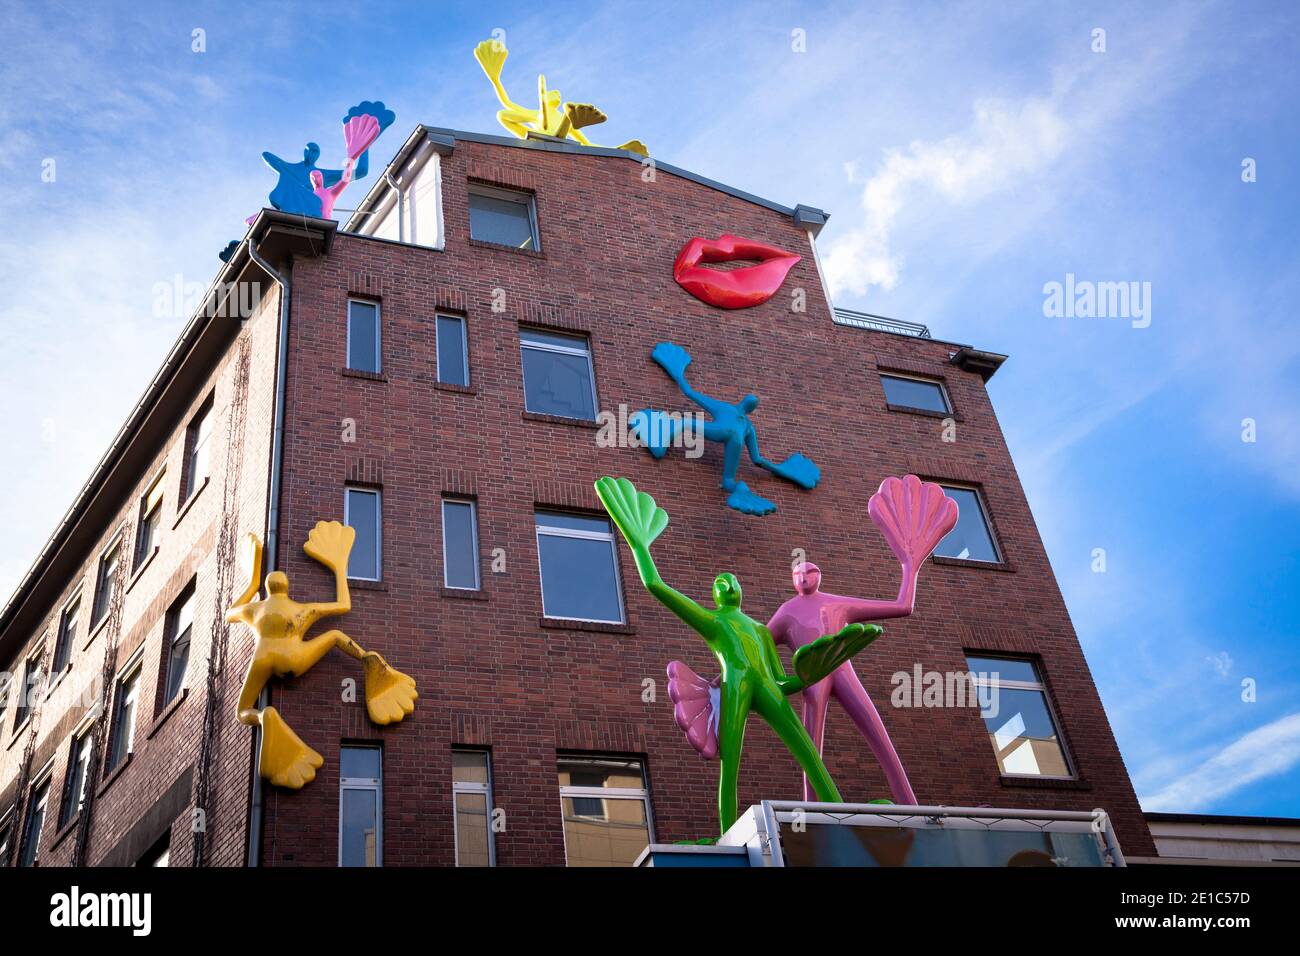 UNICEF Germany office on Hoeninger Weg in the Zollstock district, Flossi sculptures by artist Rosalie on the facade, Cologne, Germany.   Geschaeftsste Stock Photo